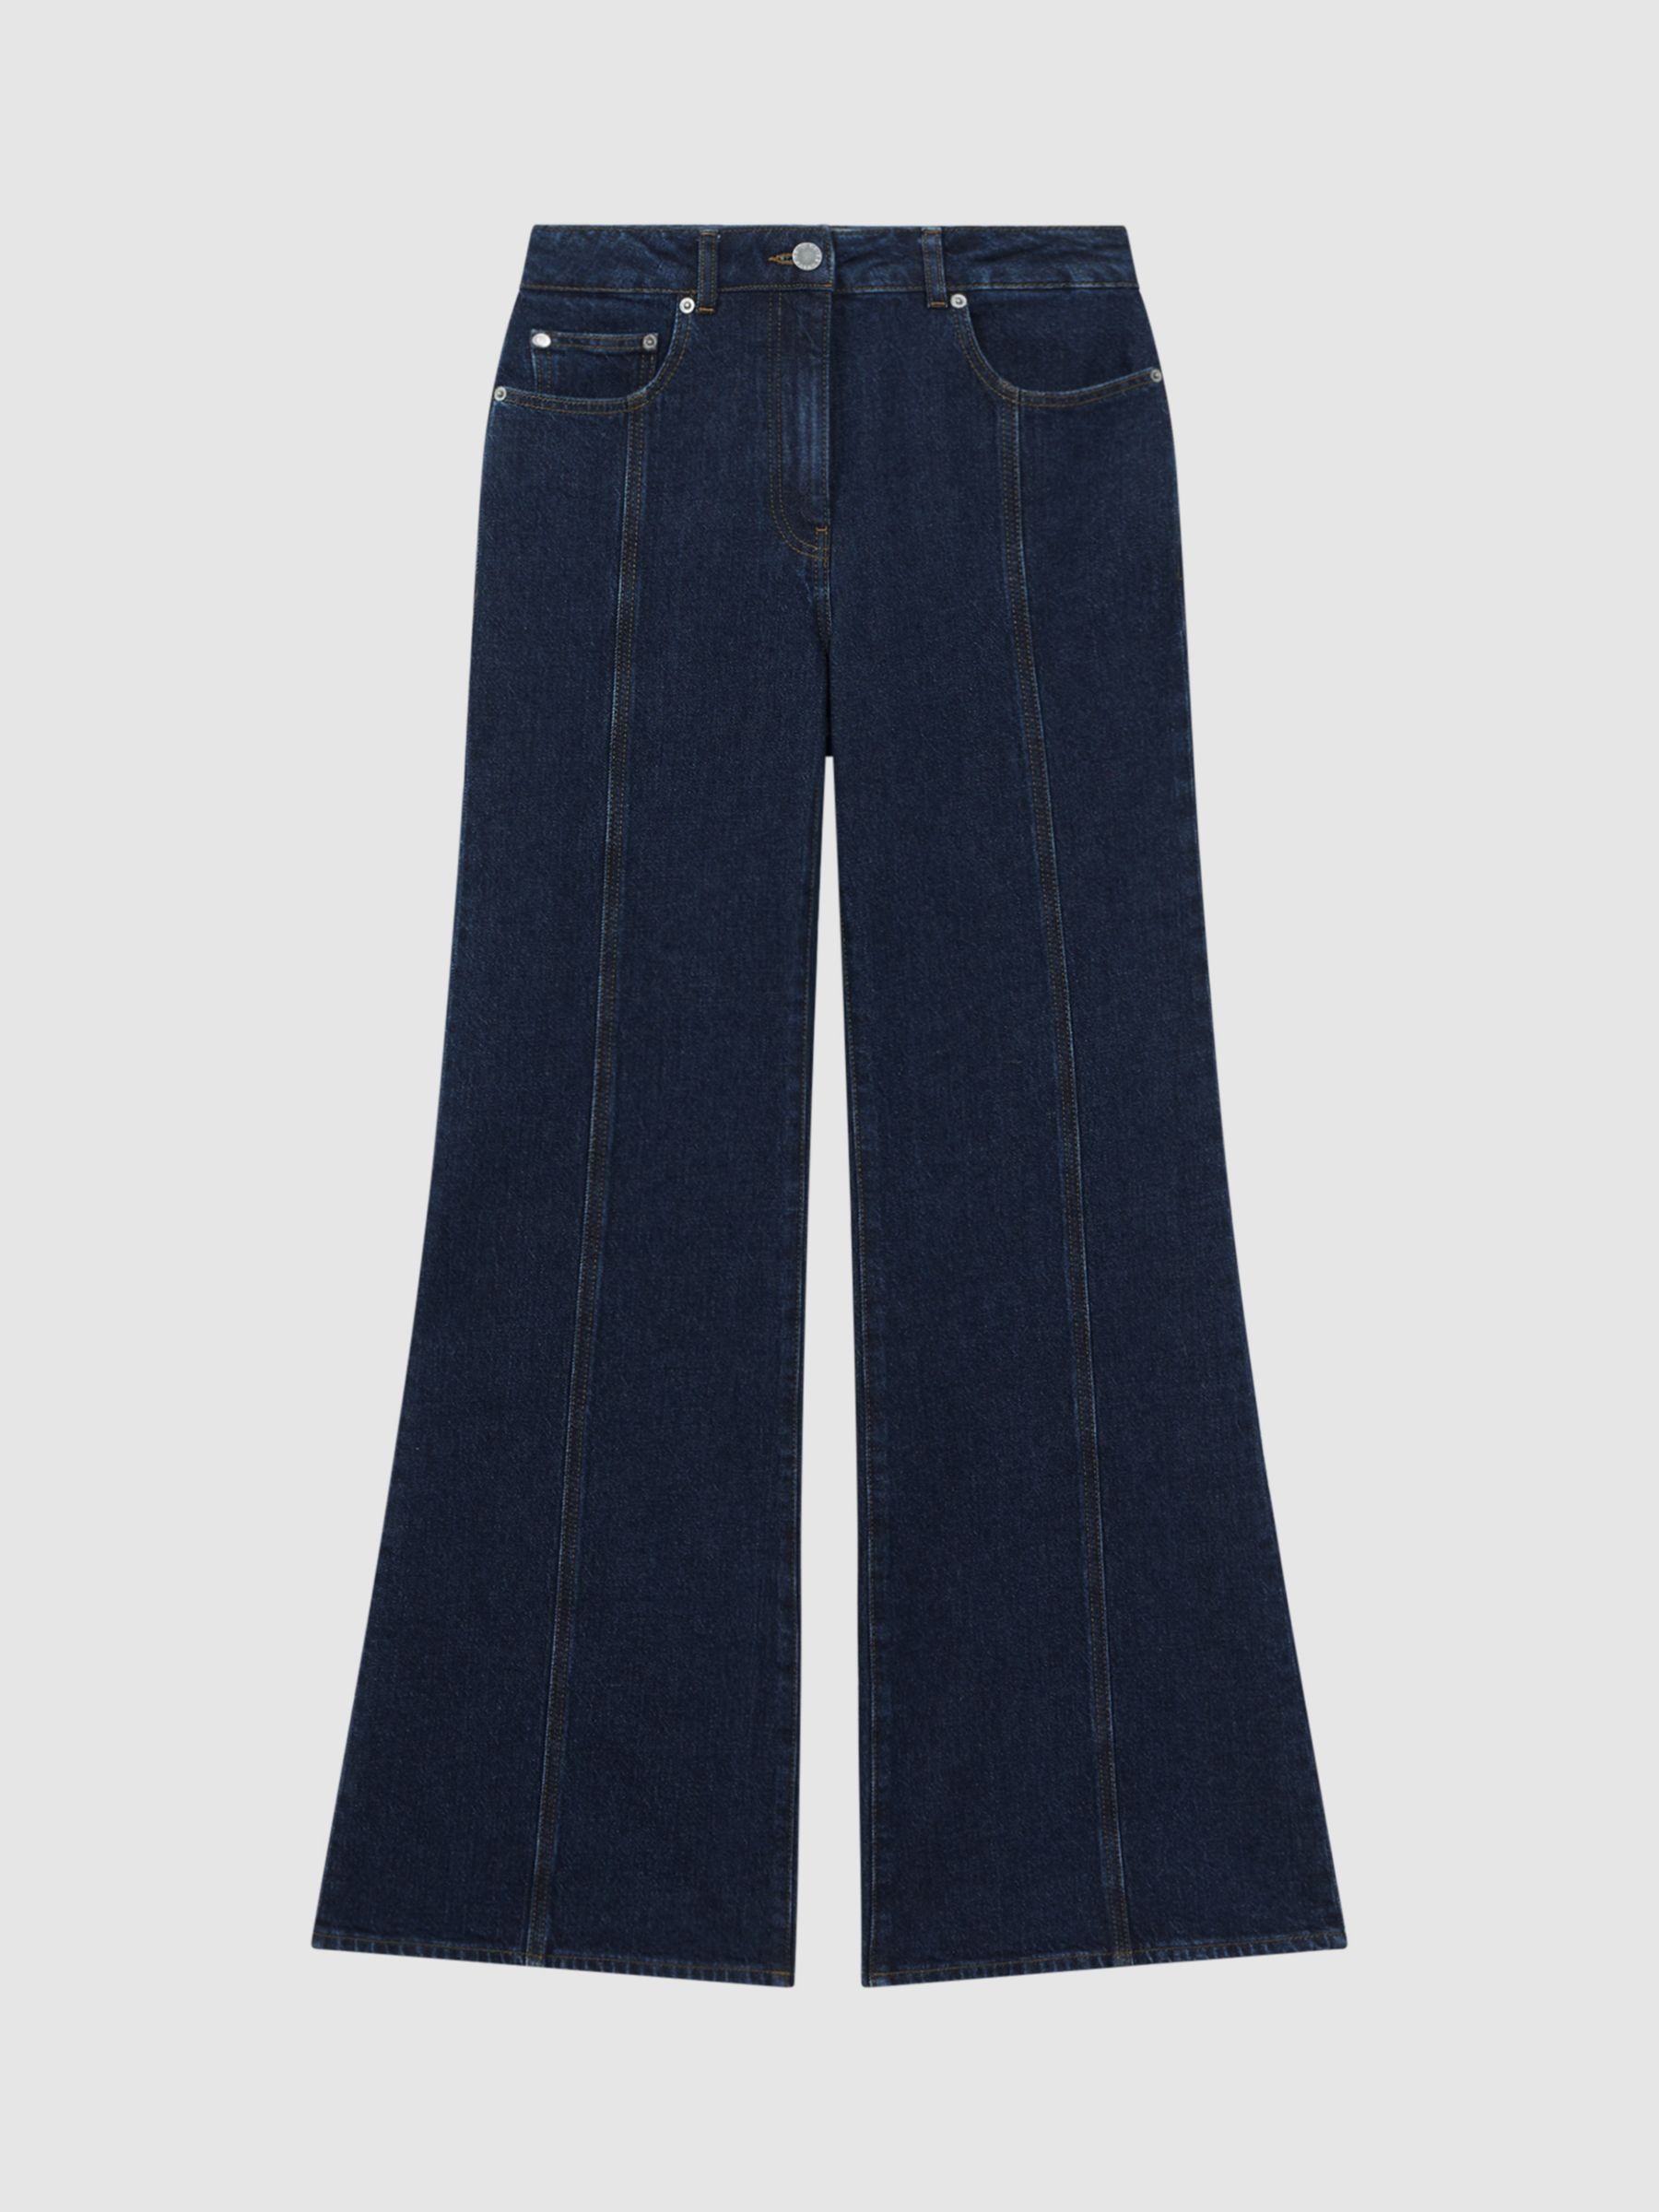 Reiss Petite Juniper Flared Jeans, Dark Blue at John Lewis & Partners